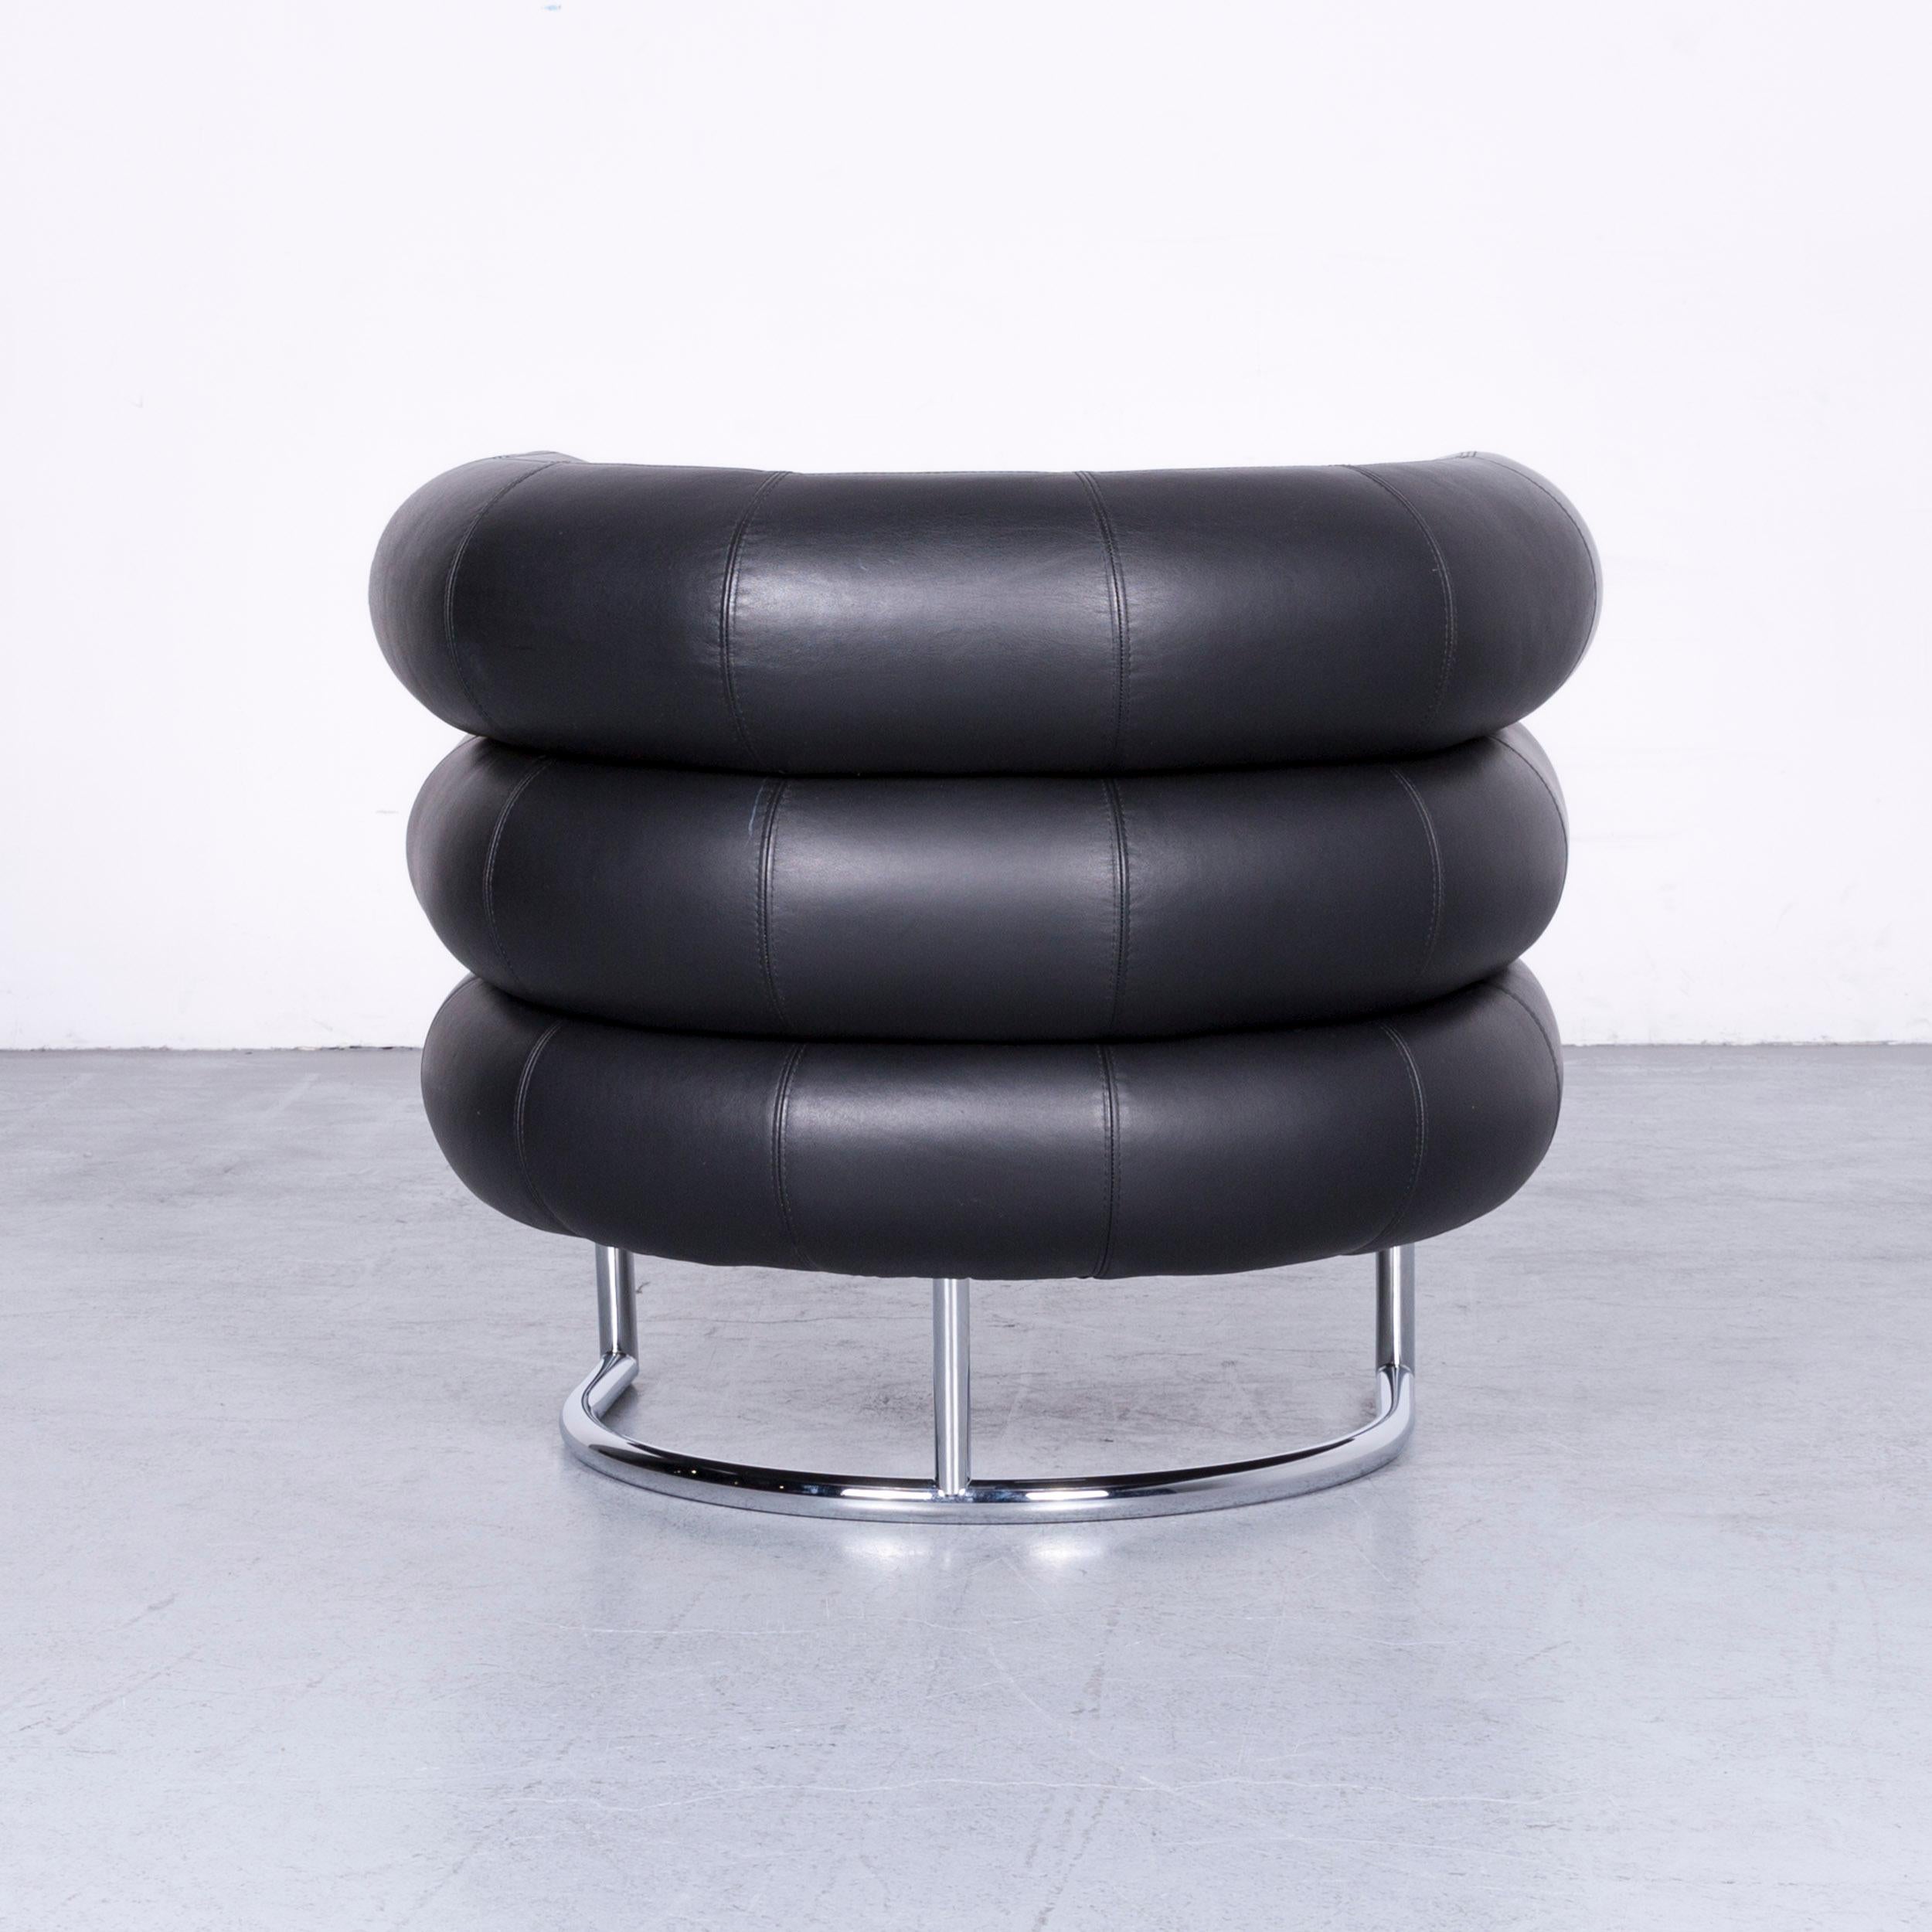 ClassiCon Bibendum Chair Designer Leather Armchair Black For Sale 2